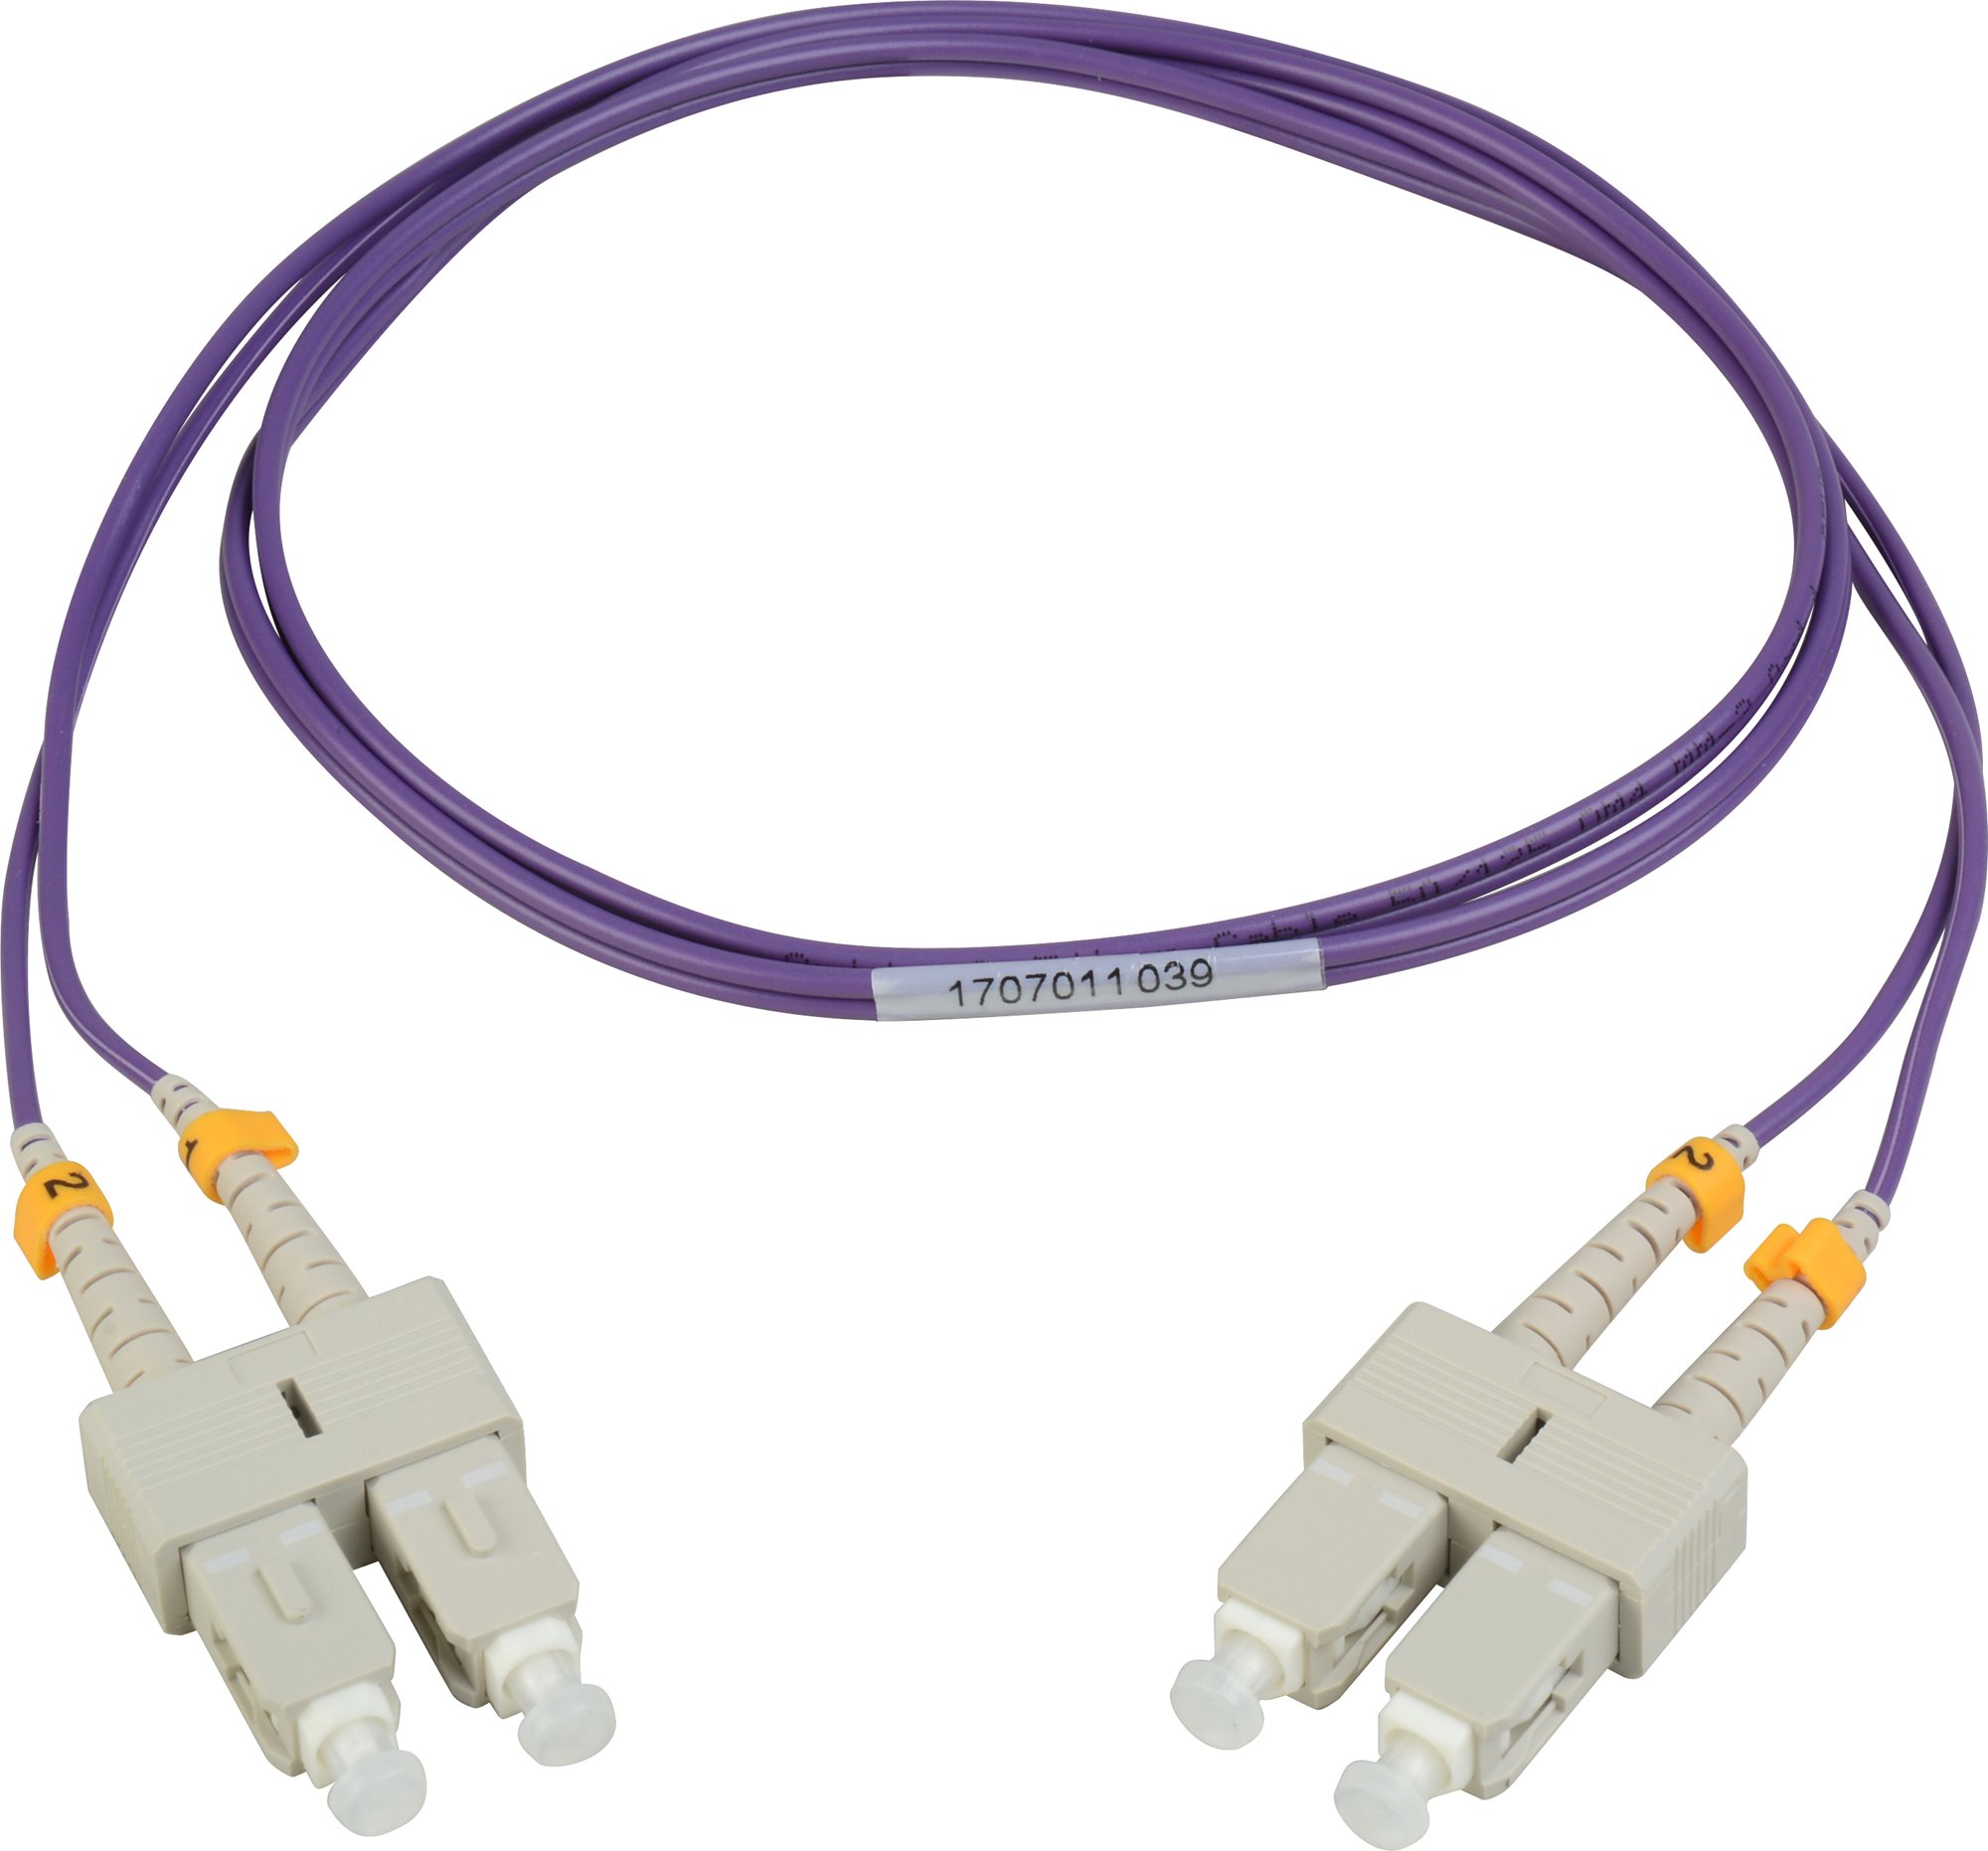 Camplex MMD50-LC-LC-001 Fiber Optic Patch Cables Multimode Duplex LC to LC Fiber